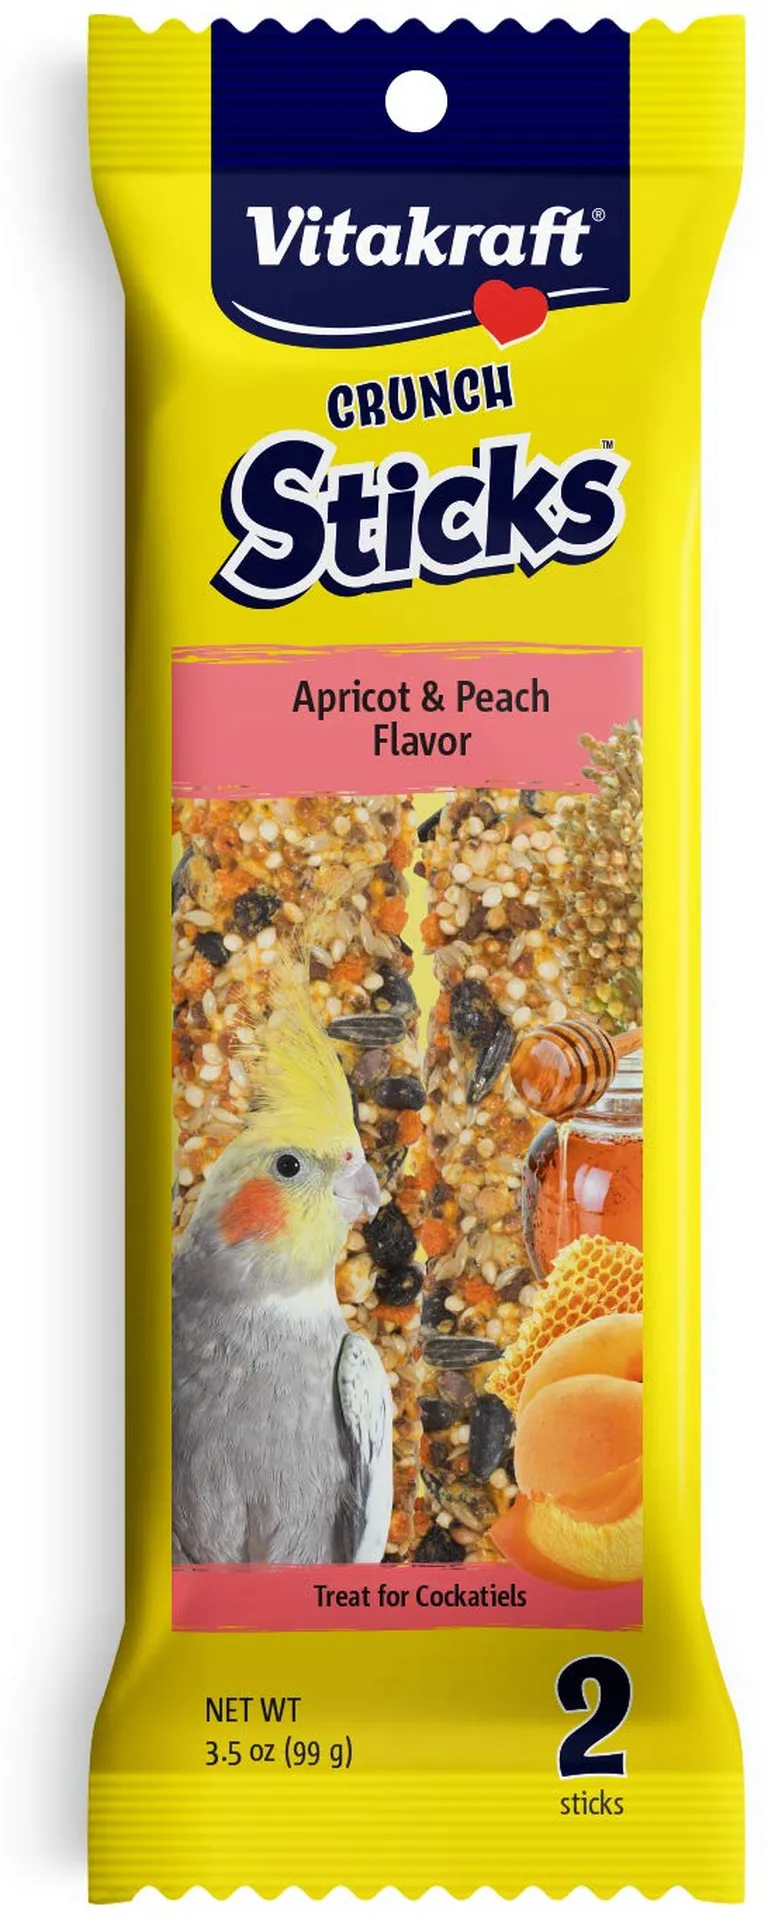 Vitakraft Crunch Sticks Apricot and Peach Cockatiel Treats Photo 1